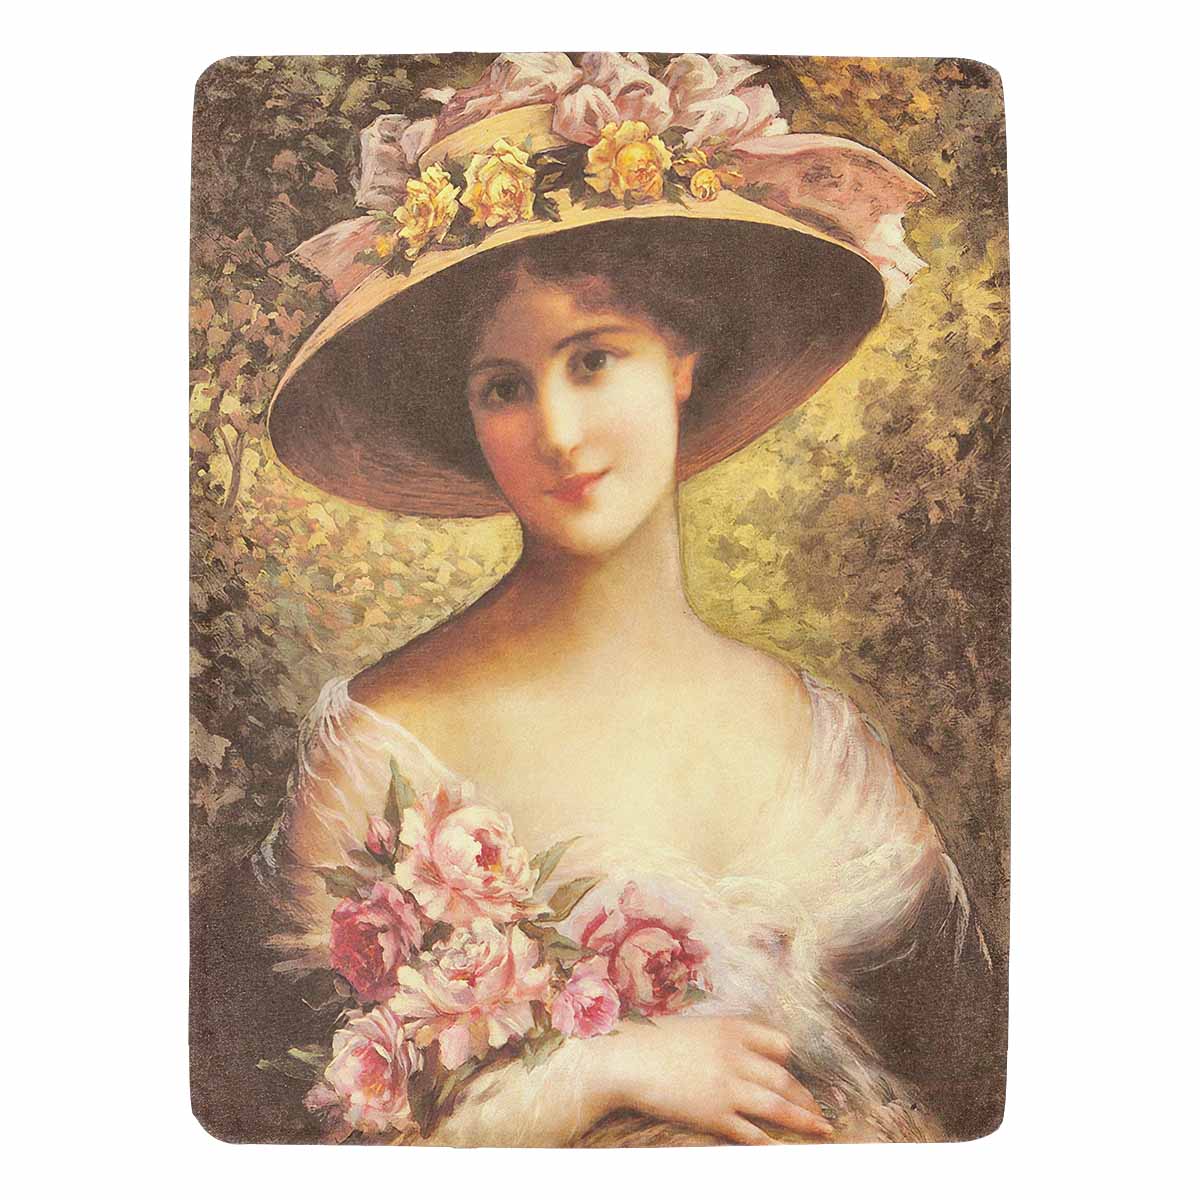 Victorian Lady Design BLANKET, LARGE 60 in x 80 in, The Fancy Bonnet